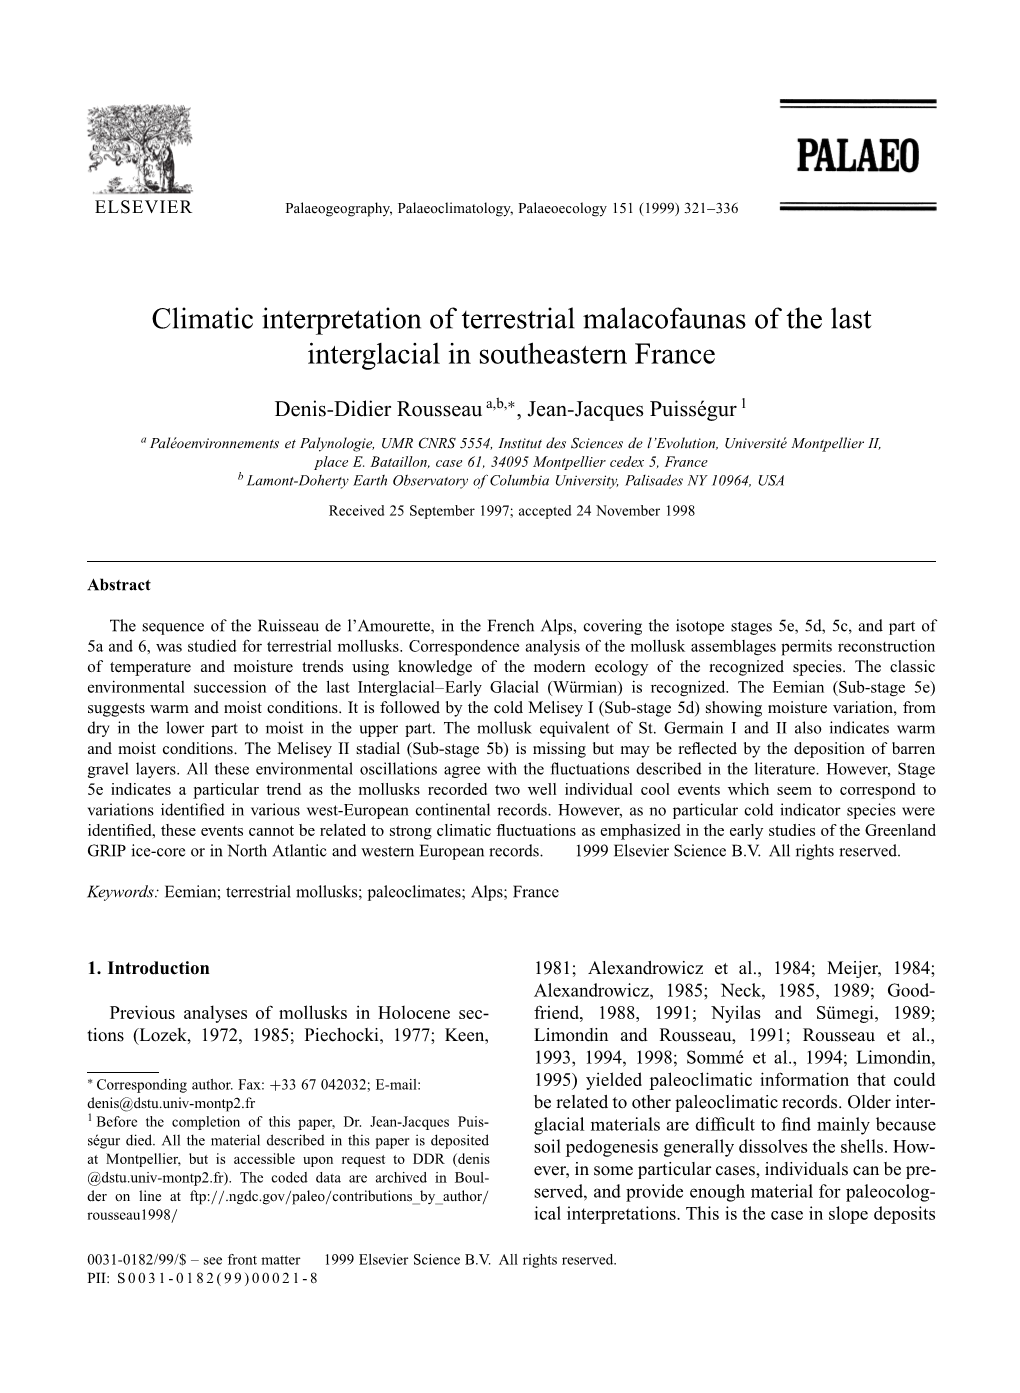 Climatic Interpretation of Terrestrial Malacofaunas of the Last Interglacial in Southeastern France